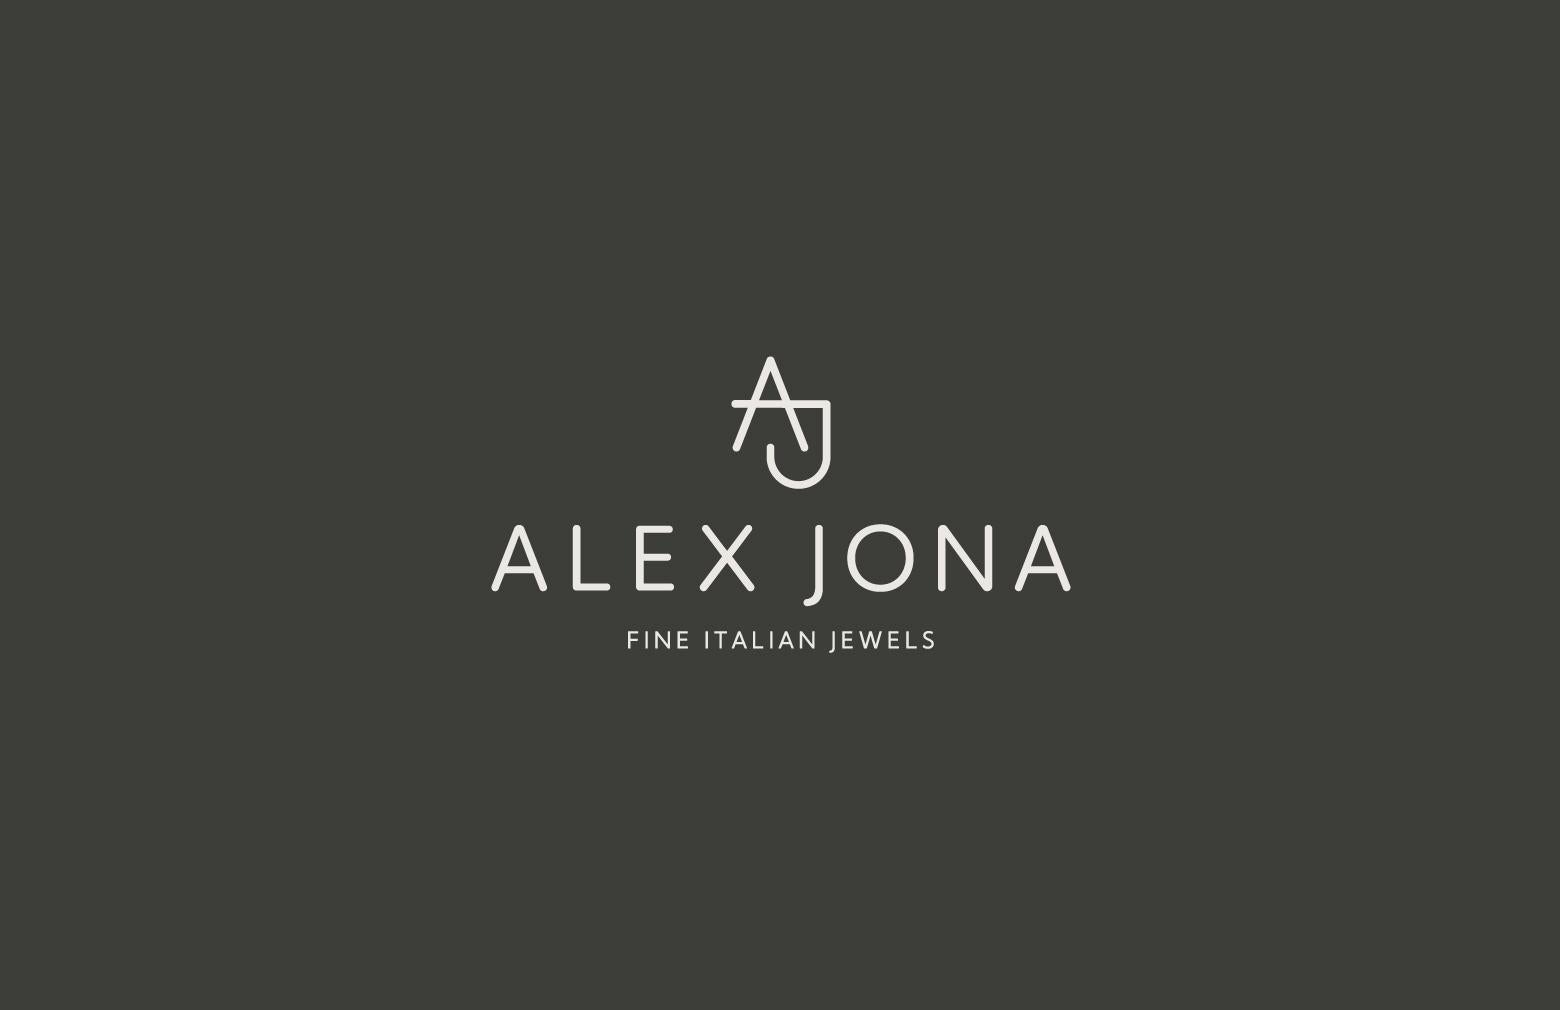 Alex Jona White Diamond 18 Karat Yellow Gold Star Earrings For Sale 6